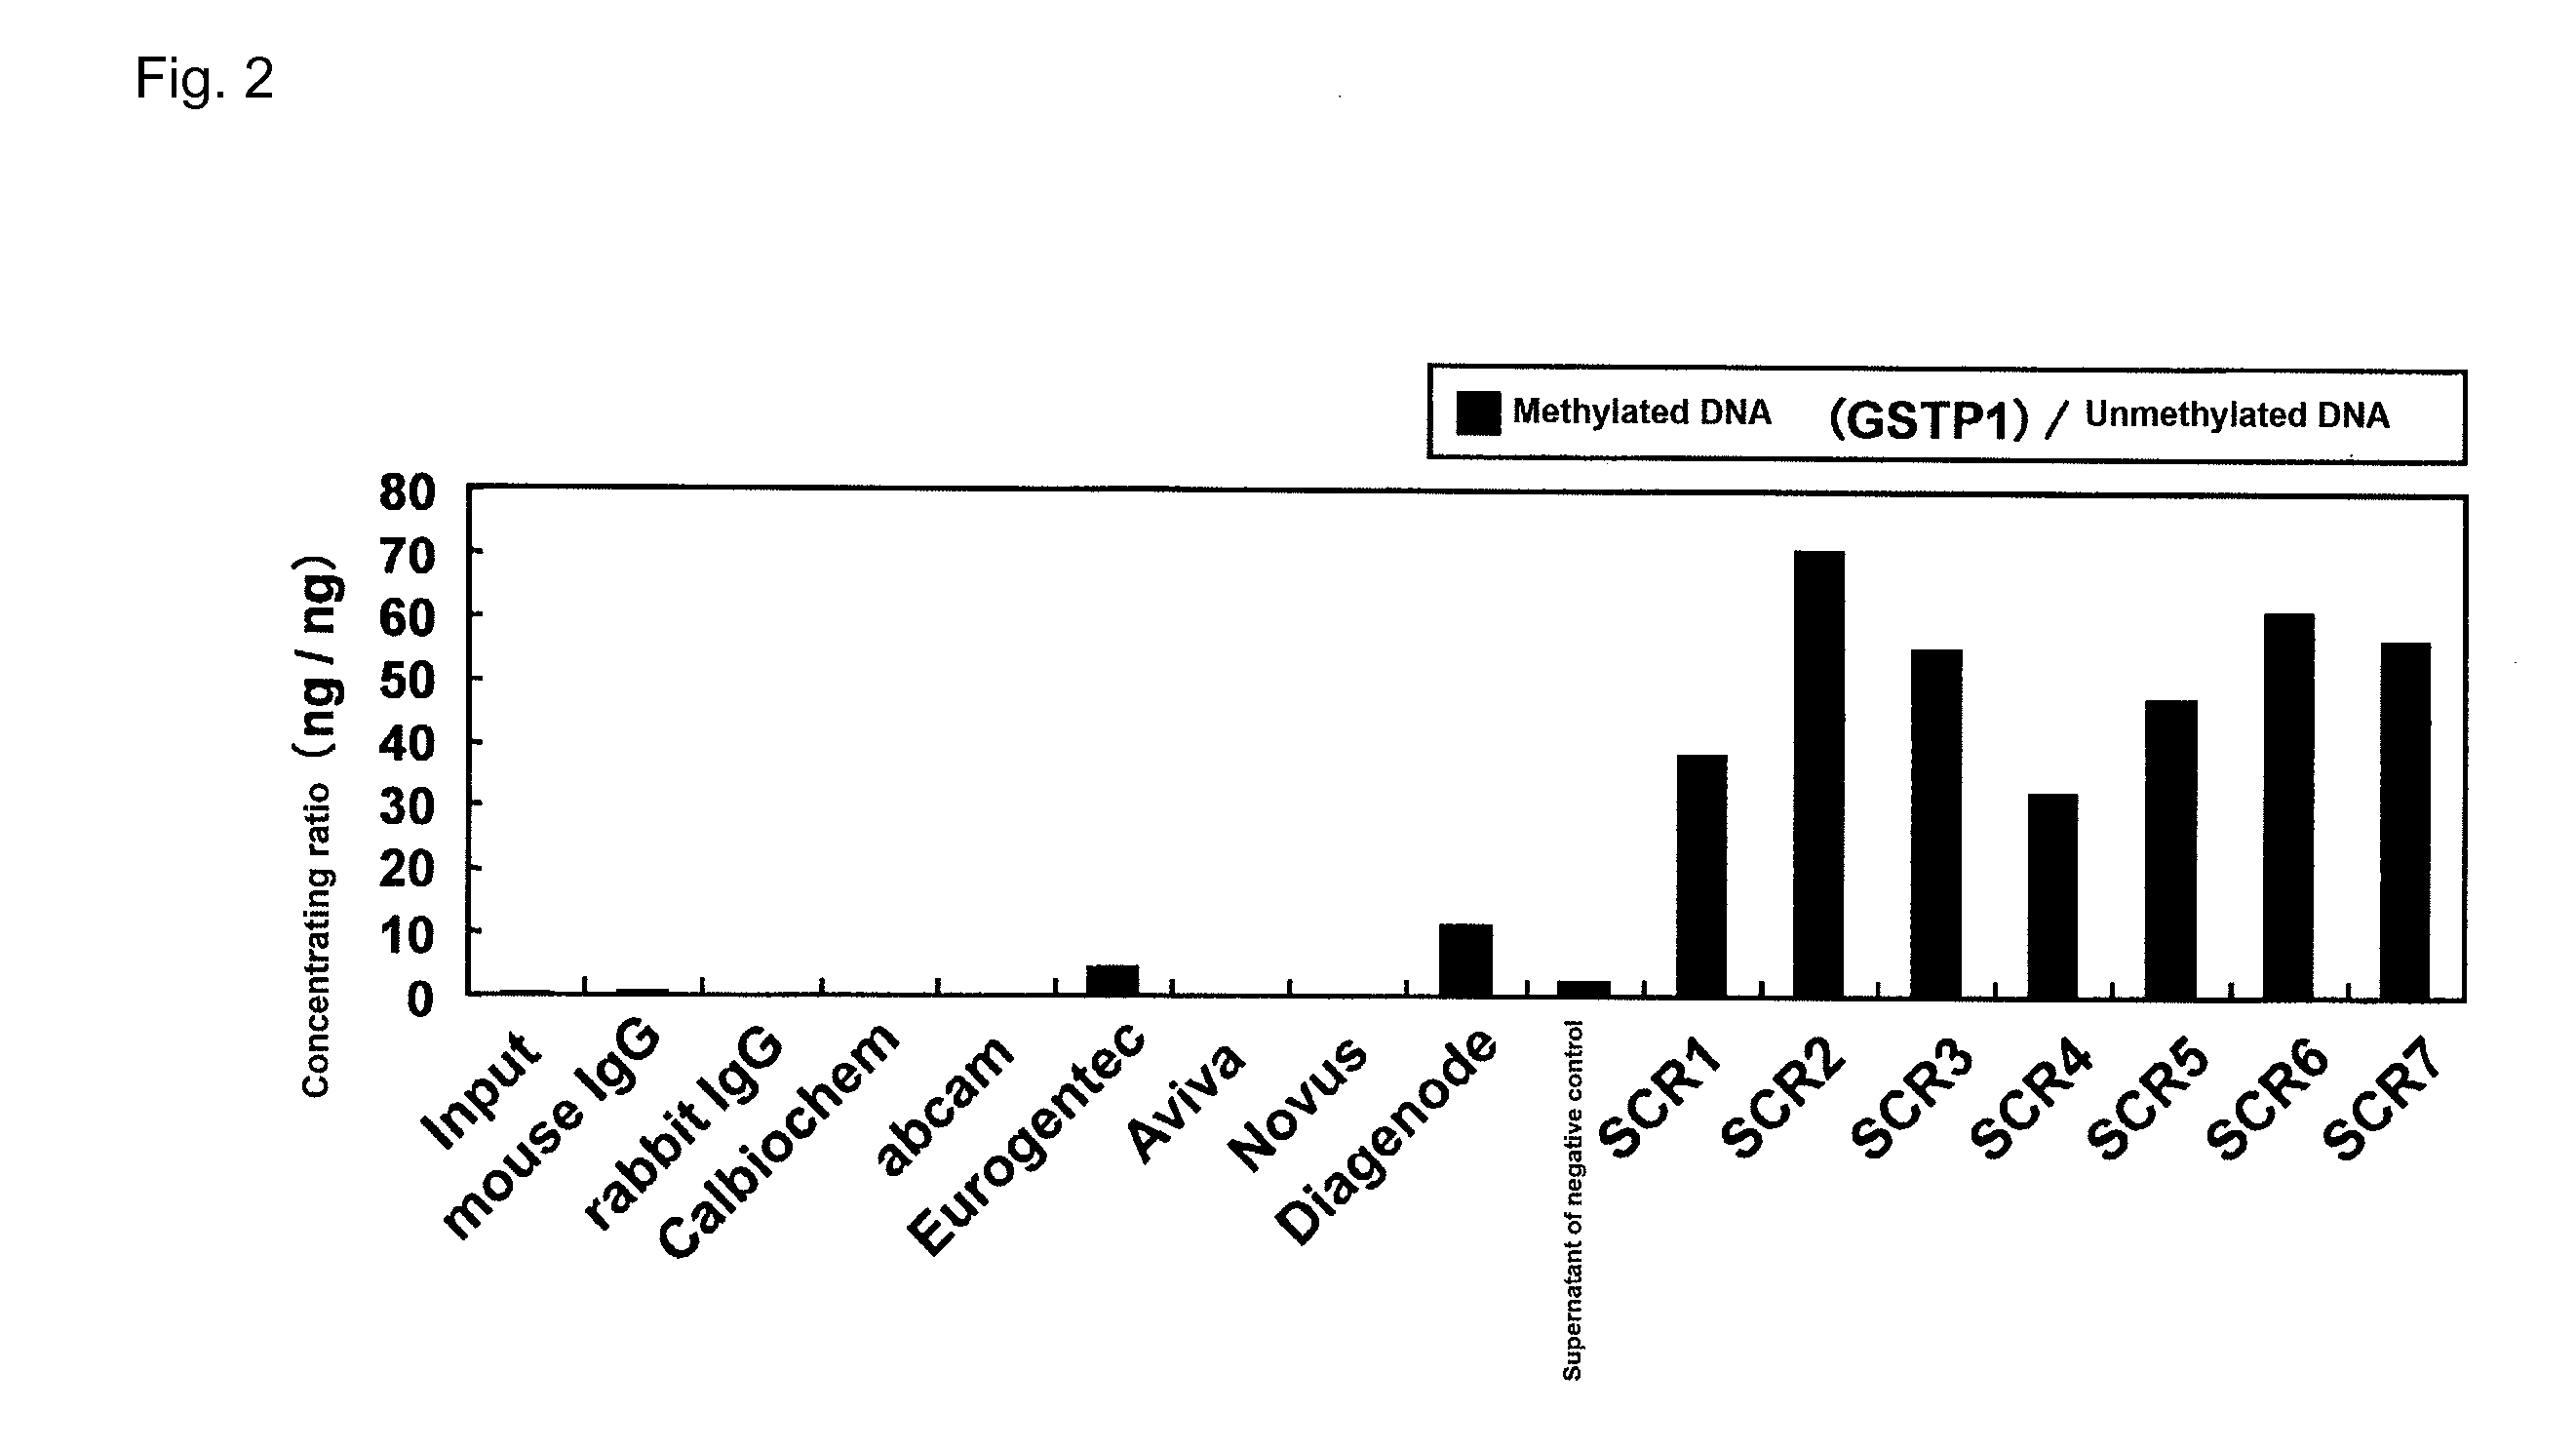 Hybridoma producing Anti-methylated DNA antibody and utilization of same